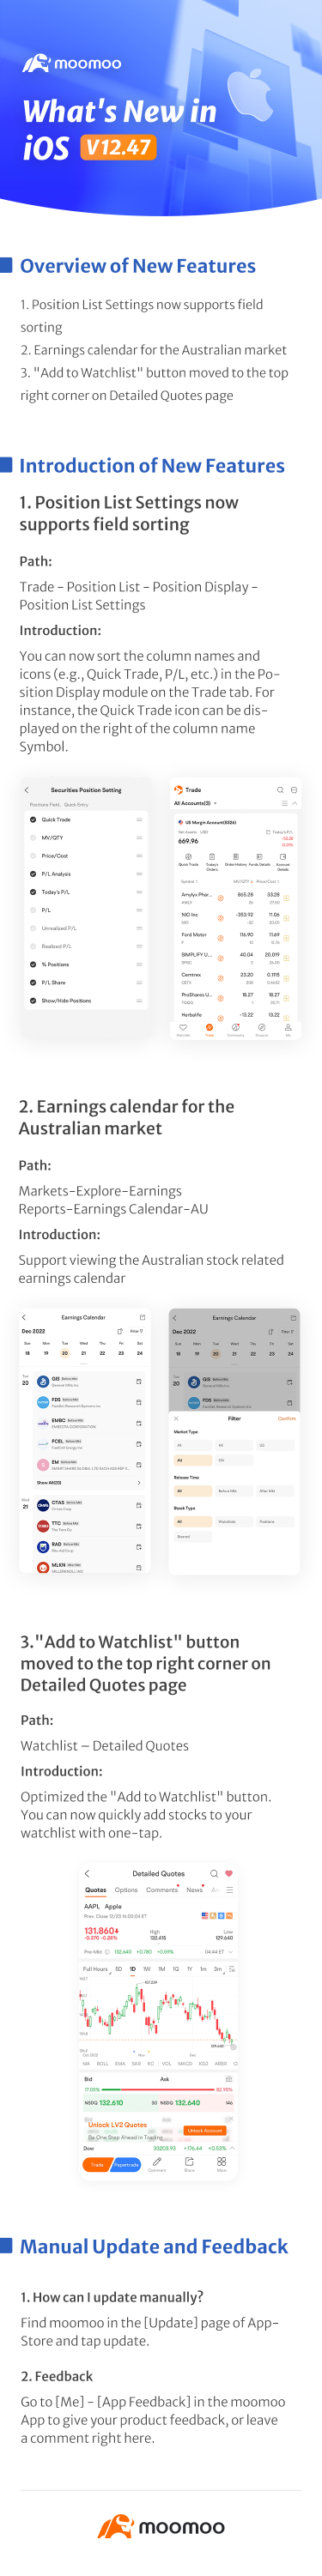 What's New: Earnings Calendar for the Australian market available in iOS v12.47